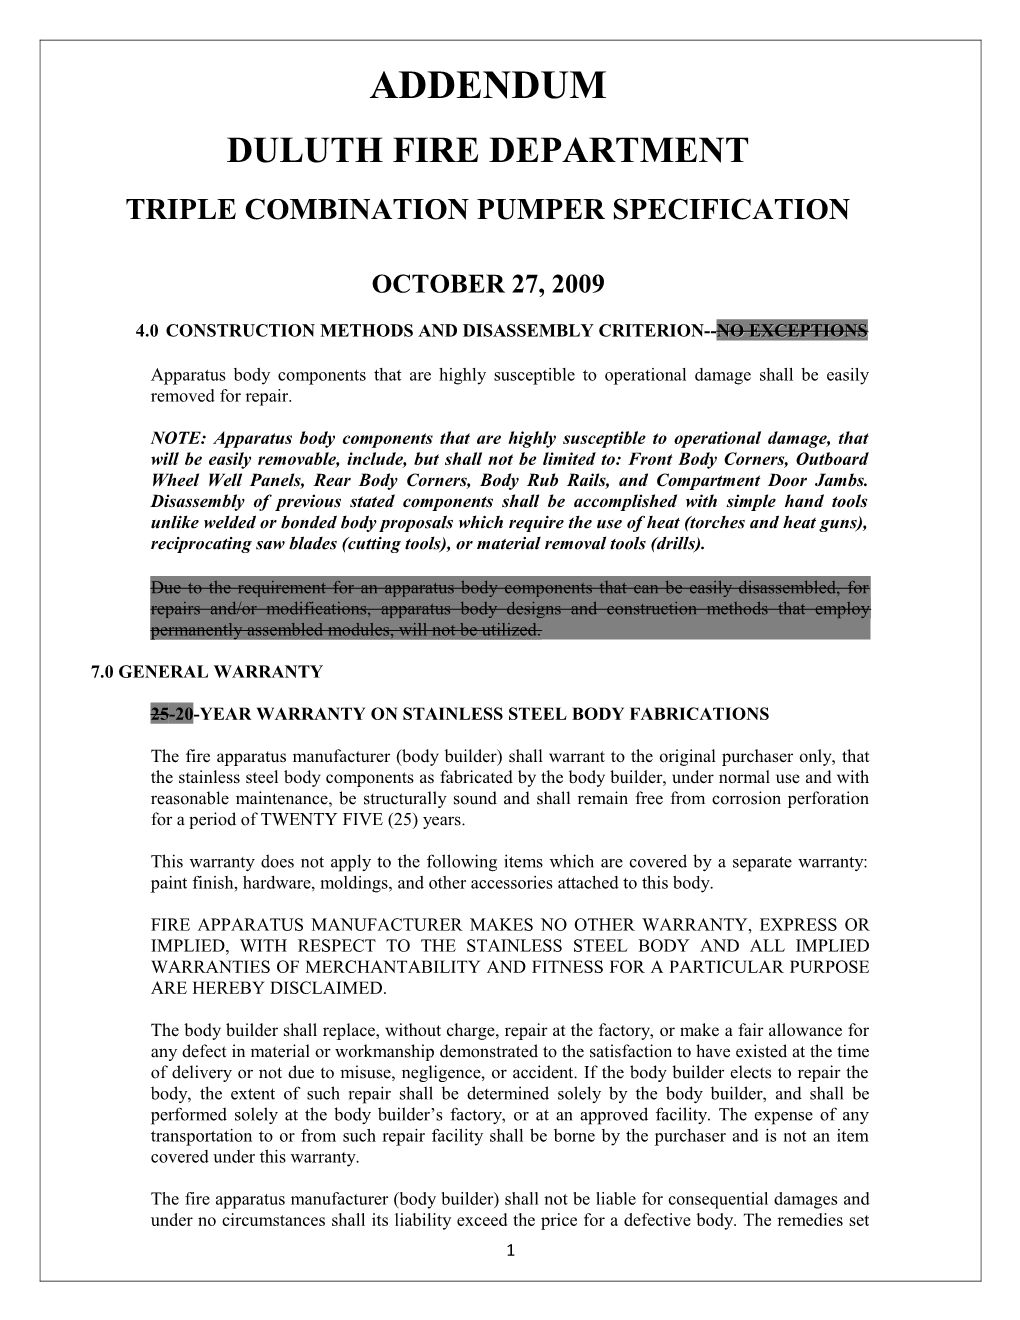 Triple Combination Pumper Specification